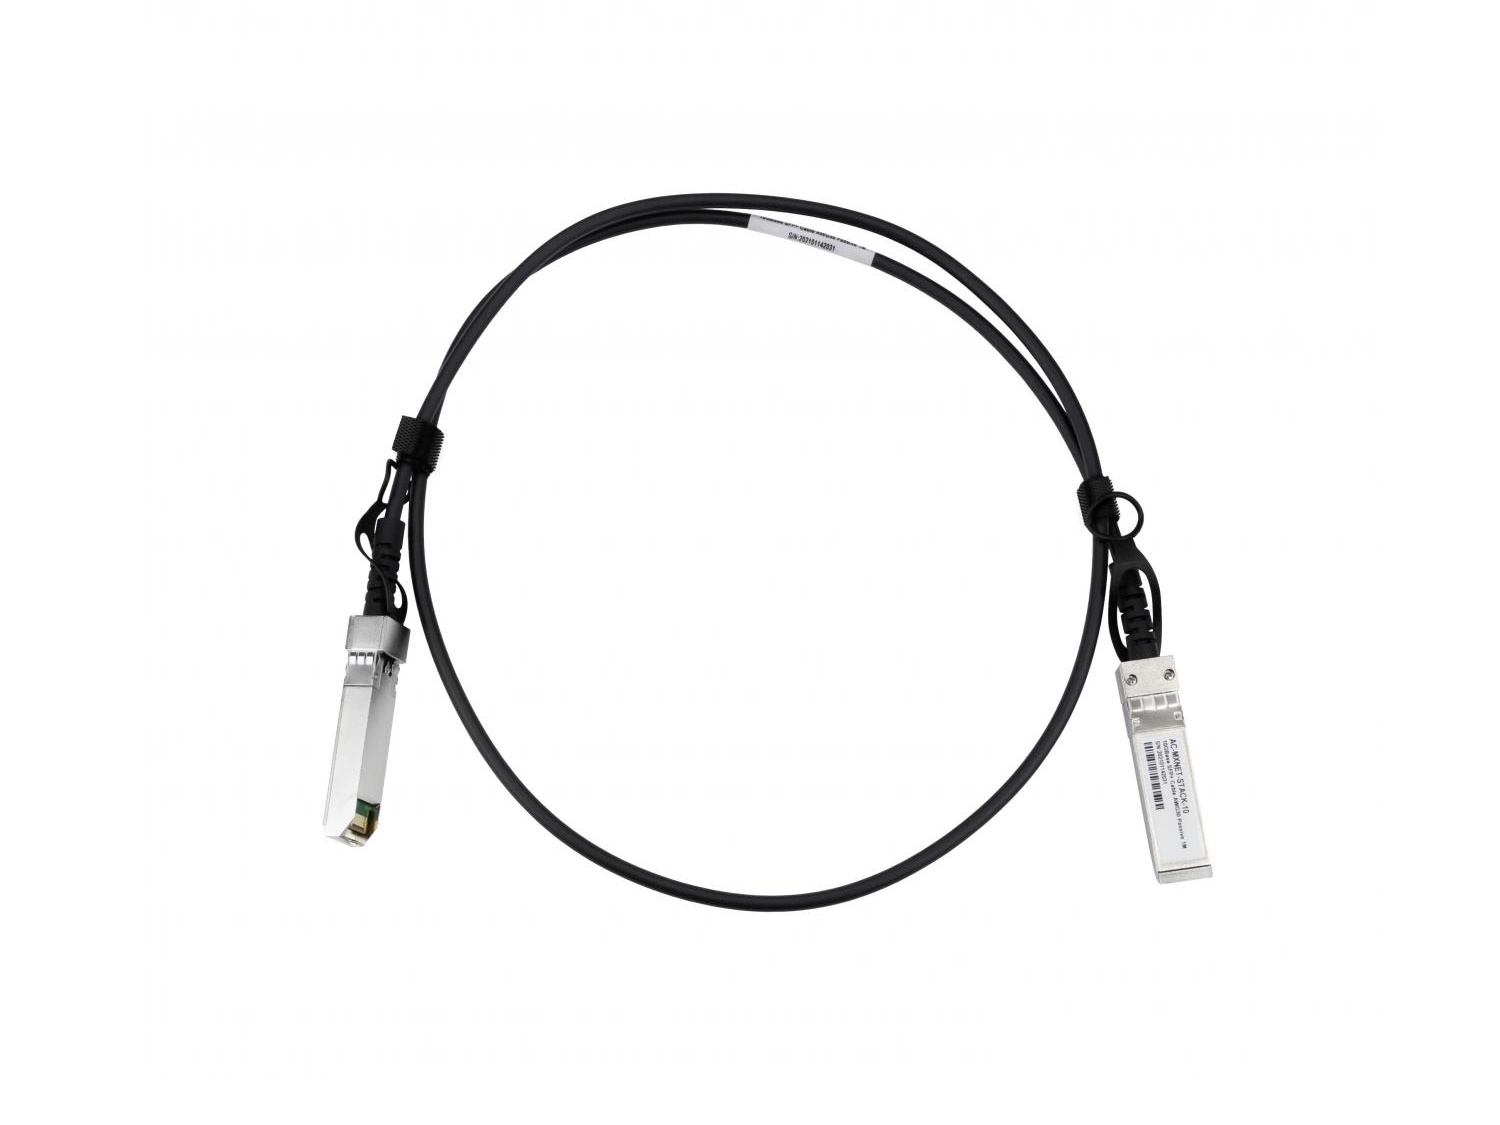 AC-MXNET-STACK20 2m Fiber Optic Link Cable by AVPro Edge